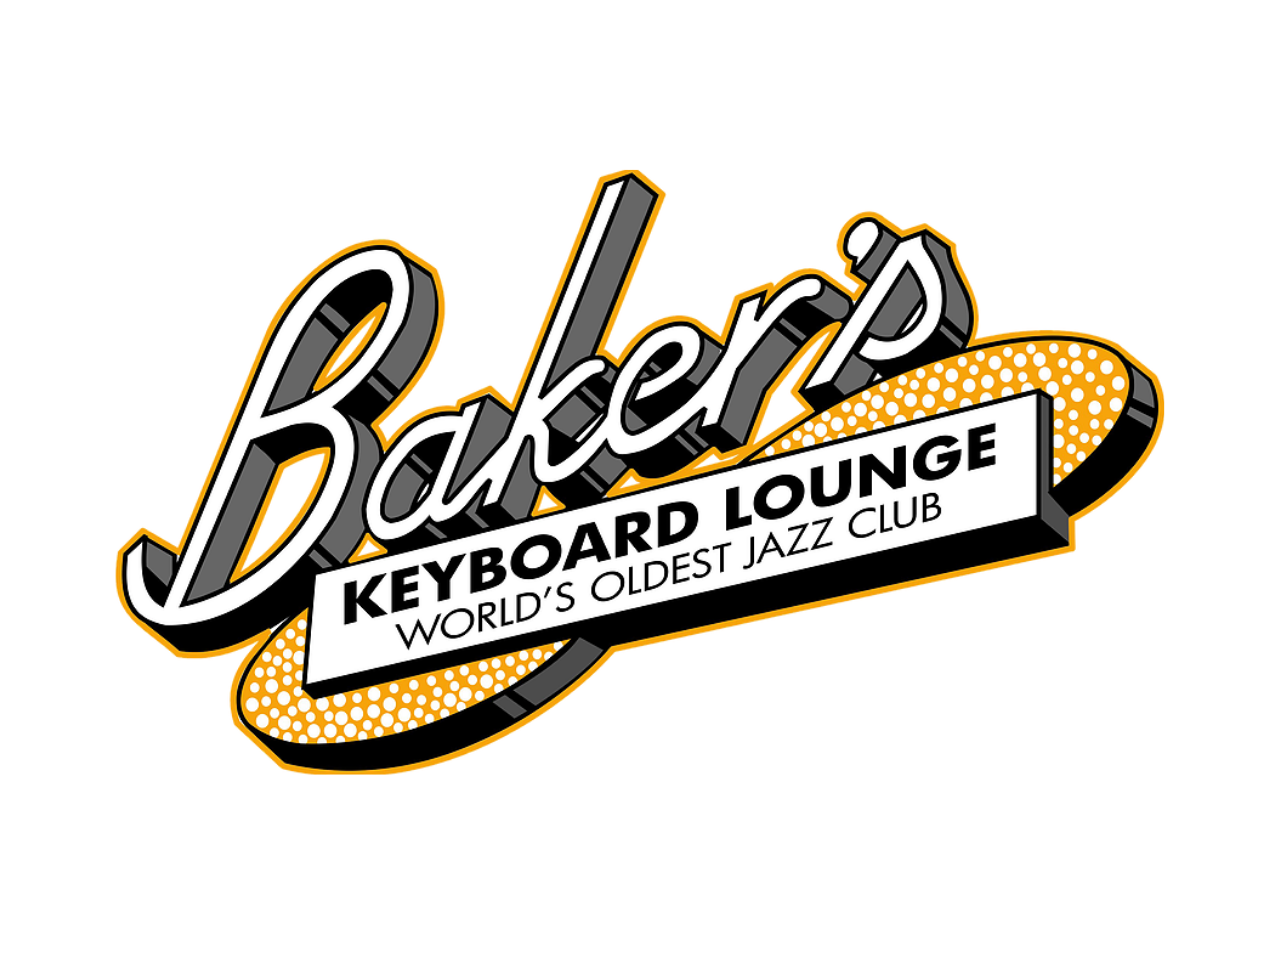 Bakers Keyboard Lounge